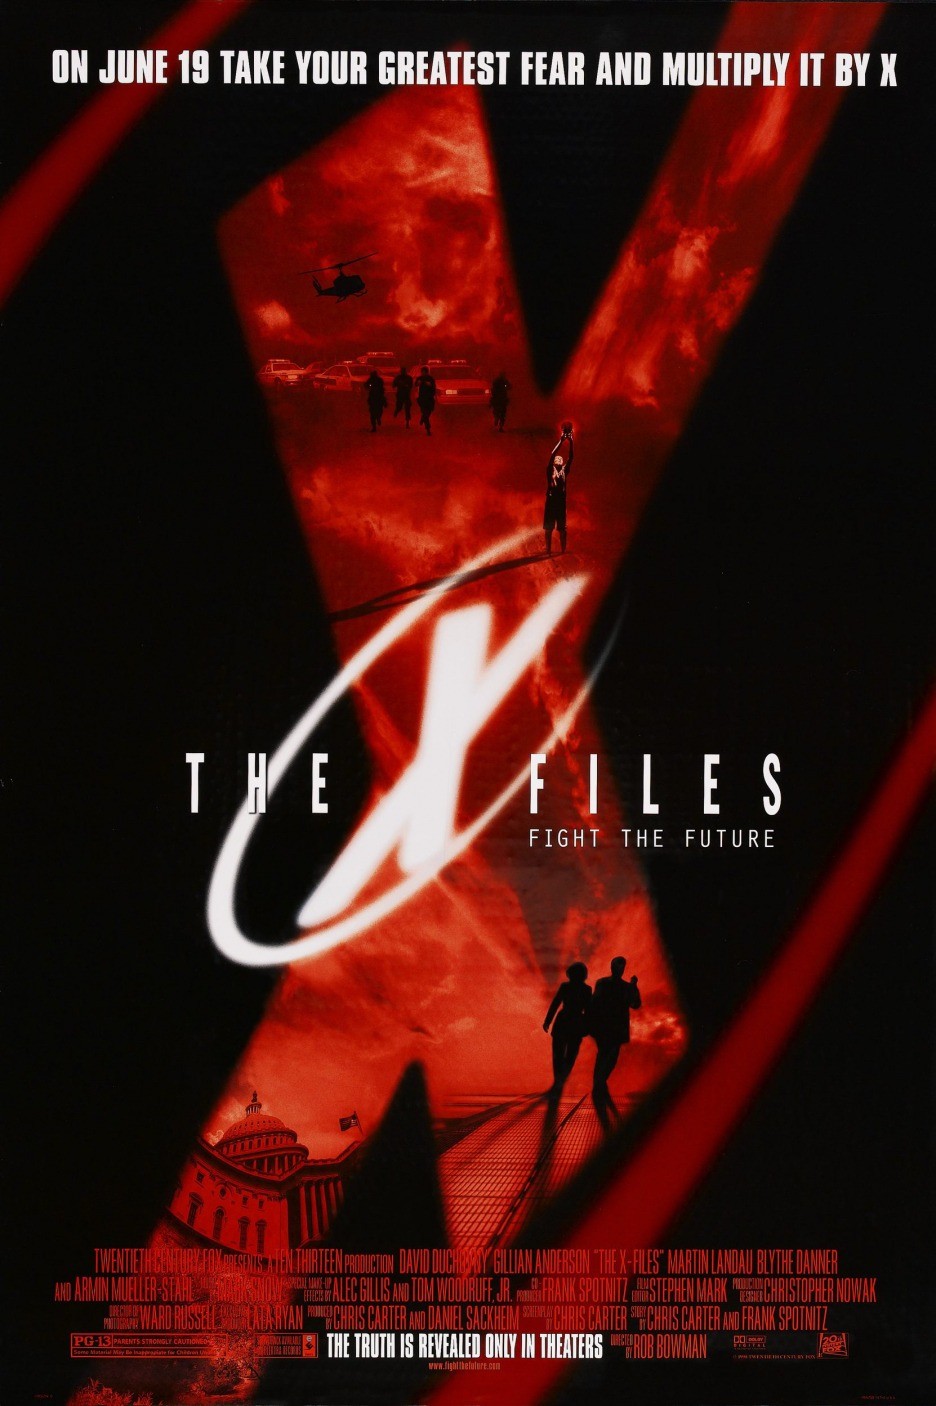 THE X-FILES [Fight the Future]